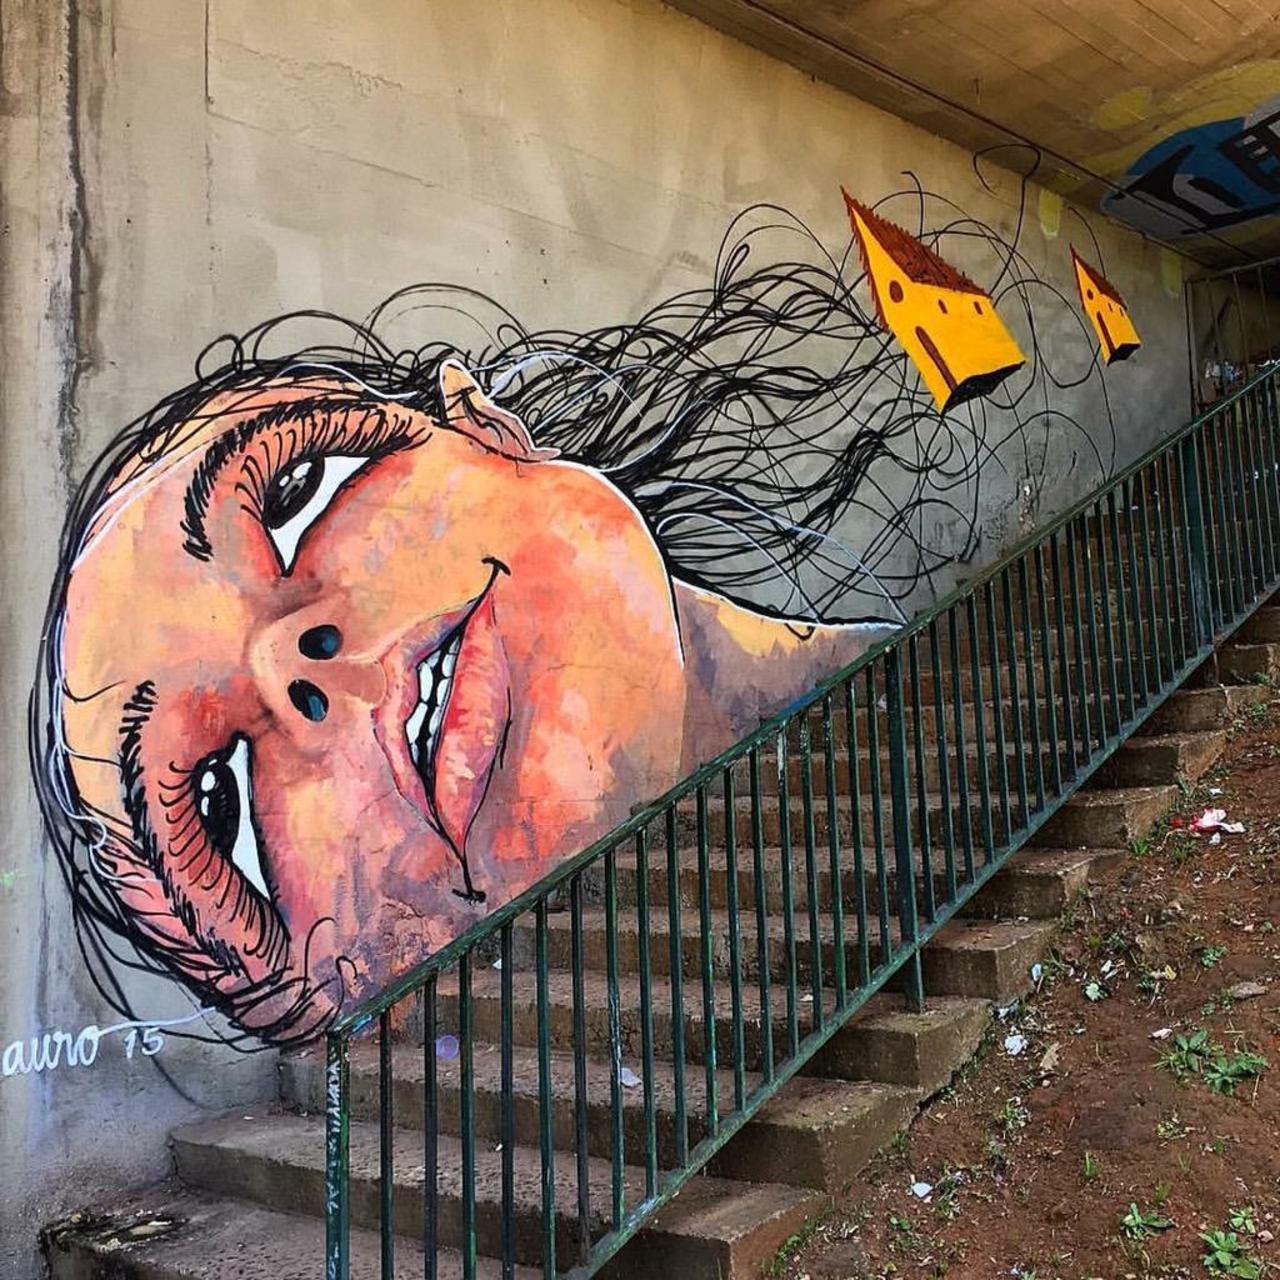 Street Art by Reveracidade in São Paulo 

#art #graffiti #mural #streetart http://t.co/Eb6KMjjli7